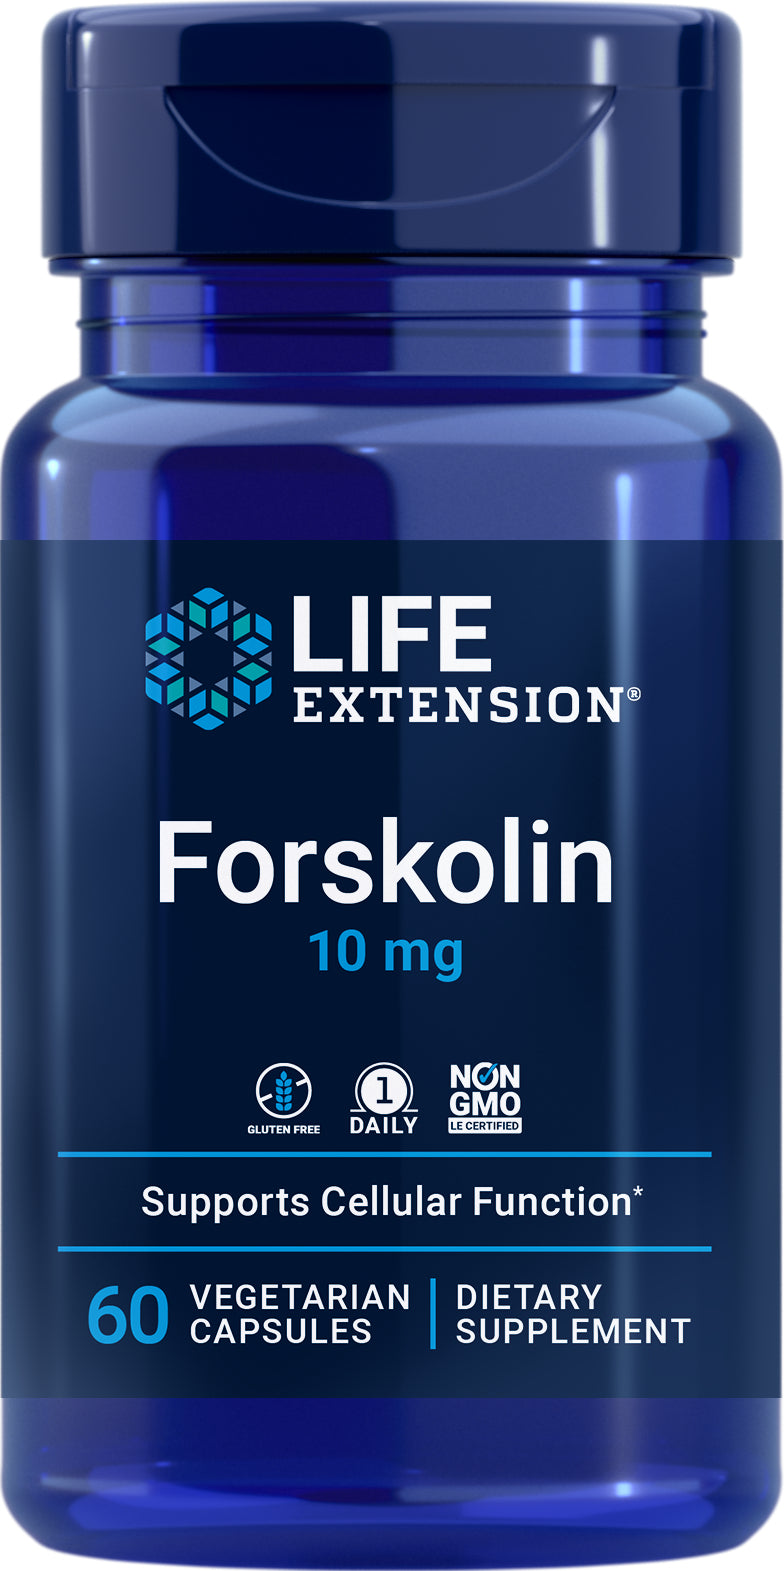 Forskolin 10 mg, 60 veg caps by Life Extension